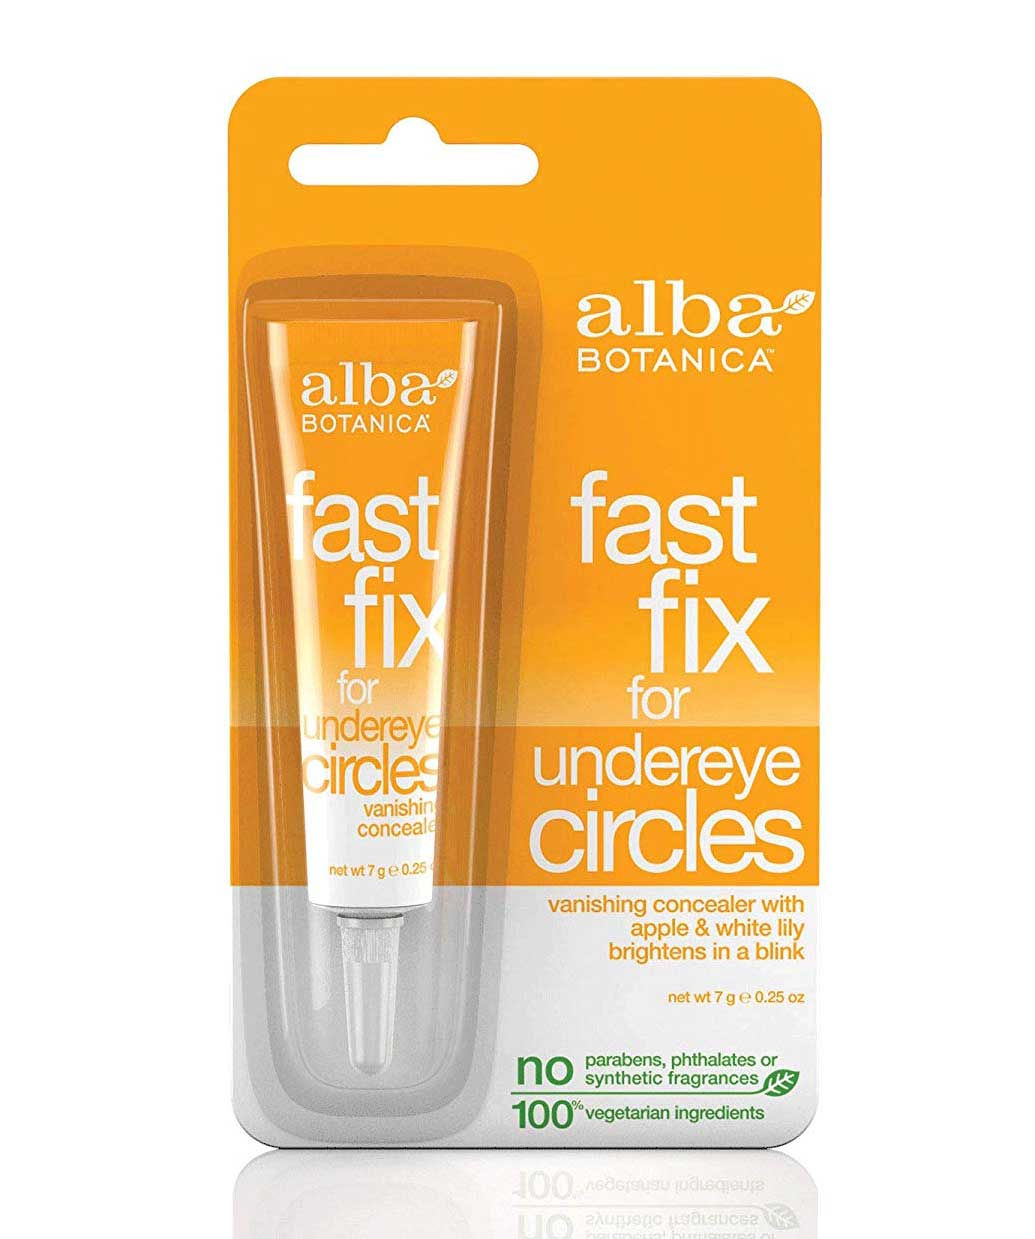 Alba fast fix for undereye circles